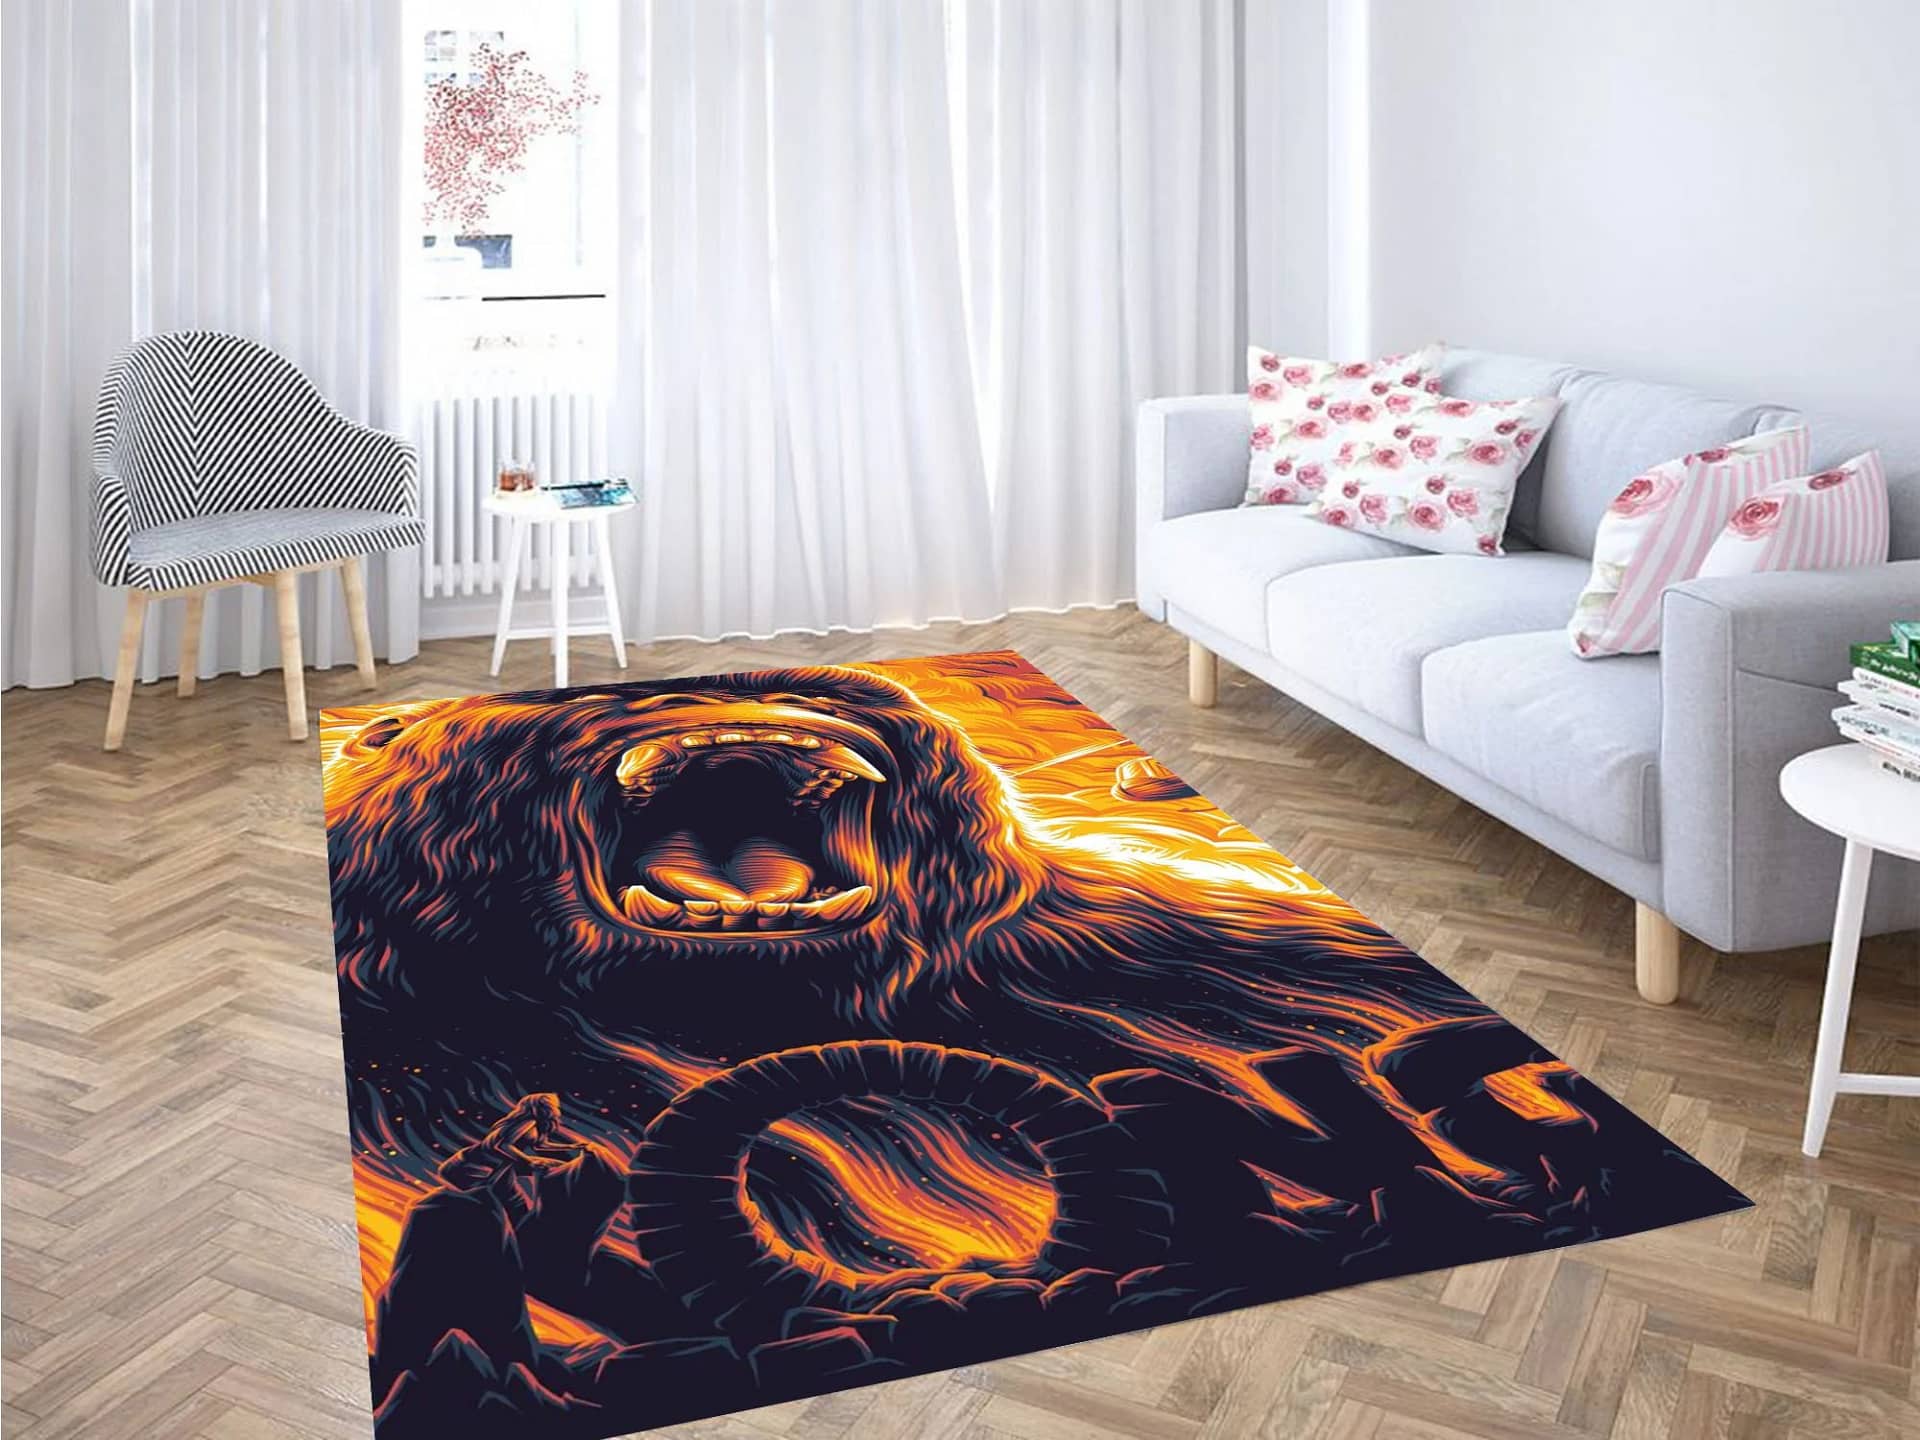 Fire Kong Skull Island Carpet Rug